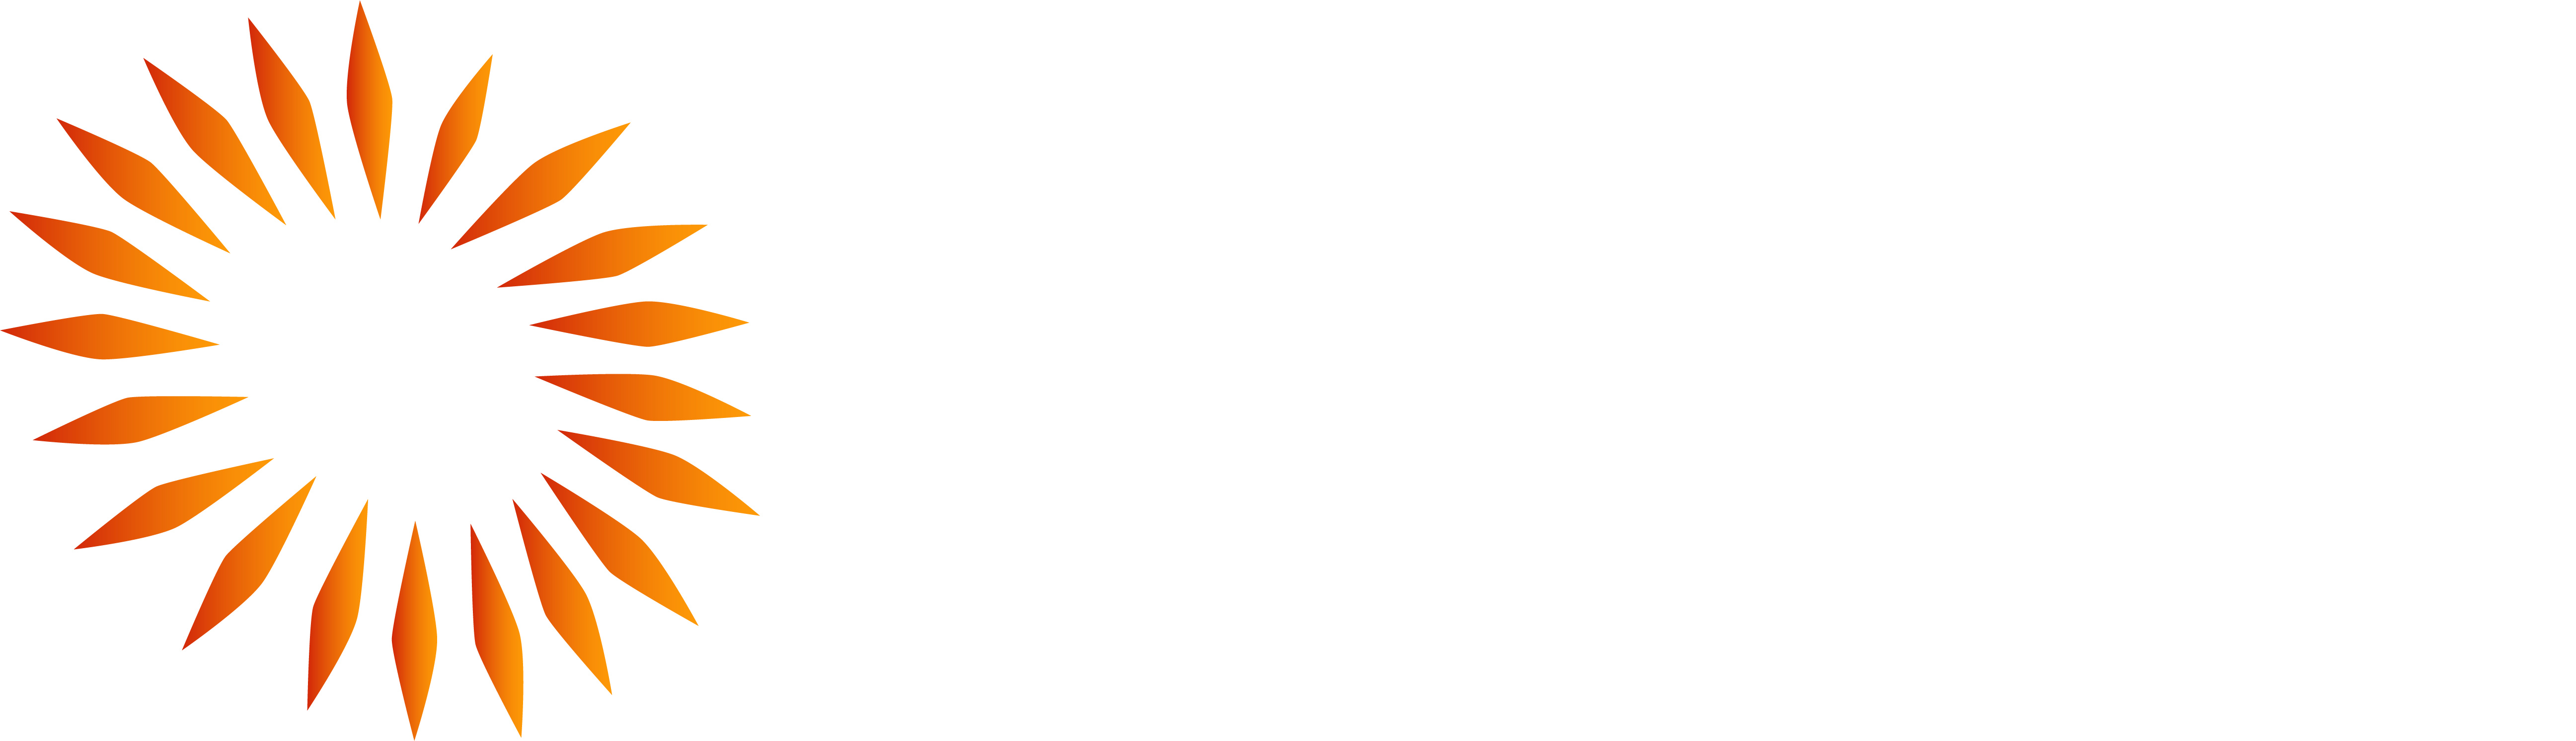 Imagine Events DMC